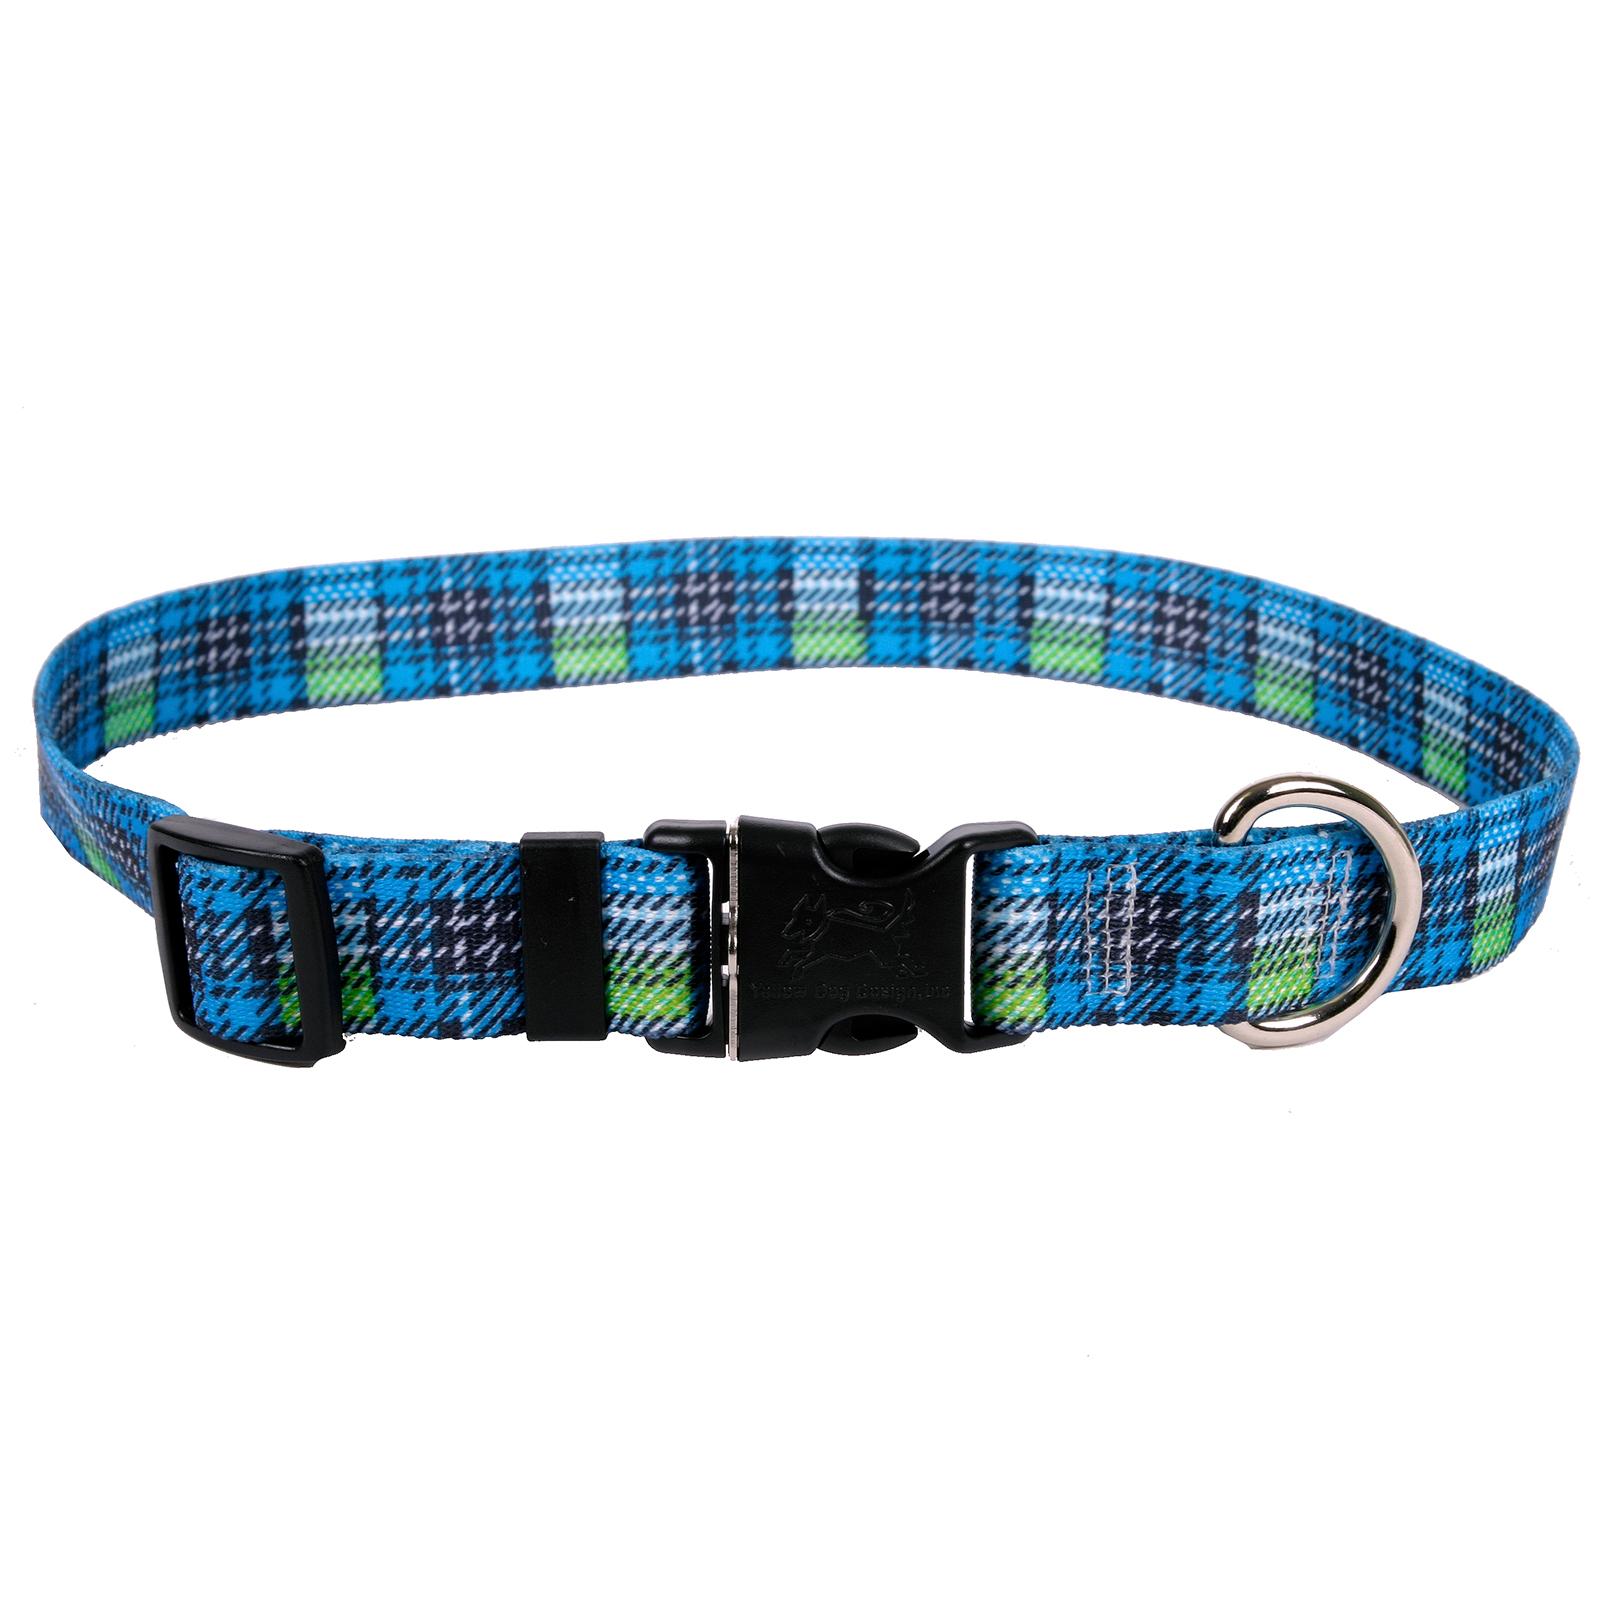 Highland Plaid Dog Collar by Yellow Dog - Blue